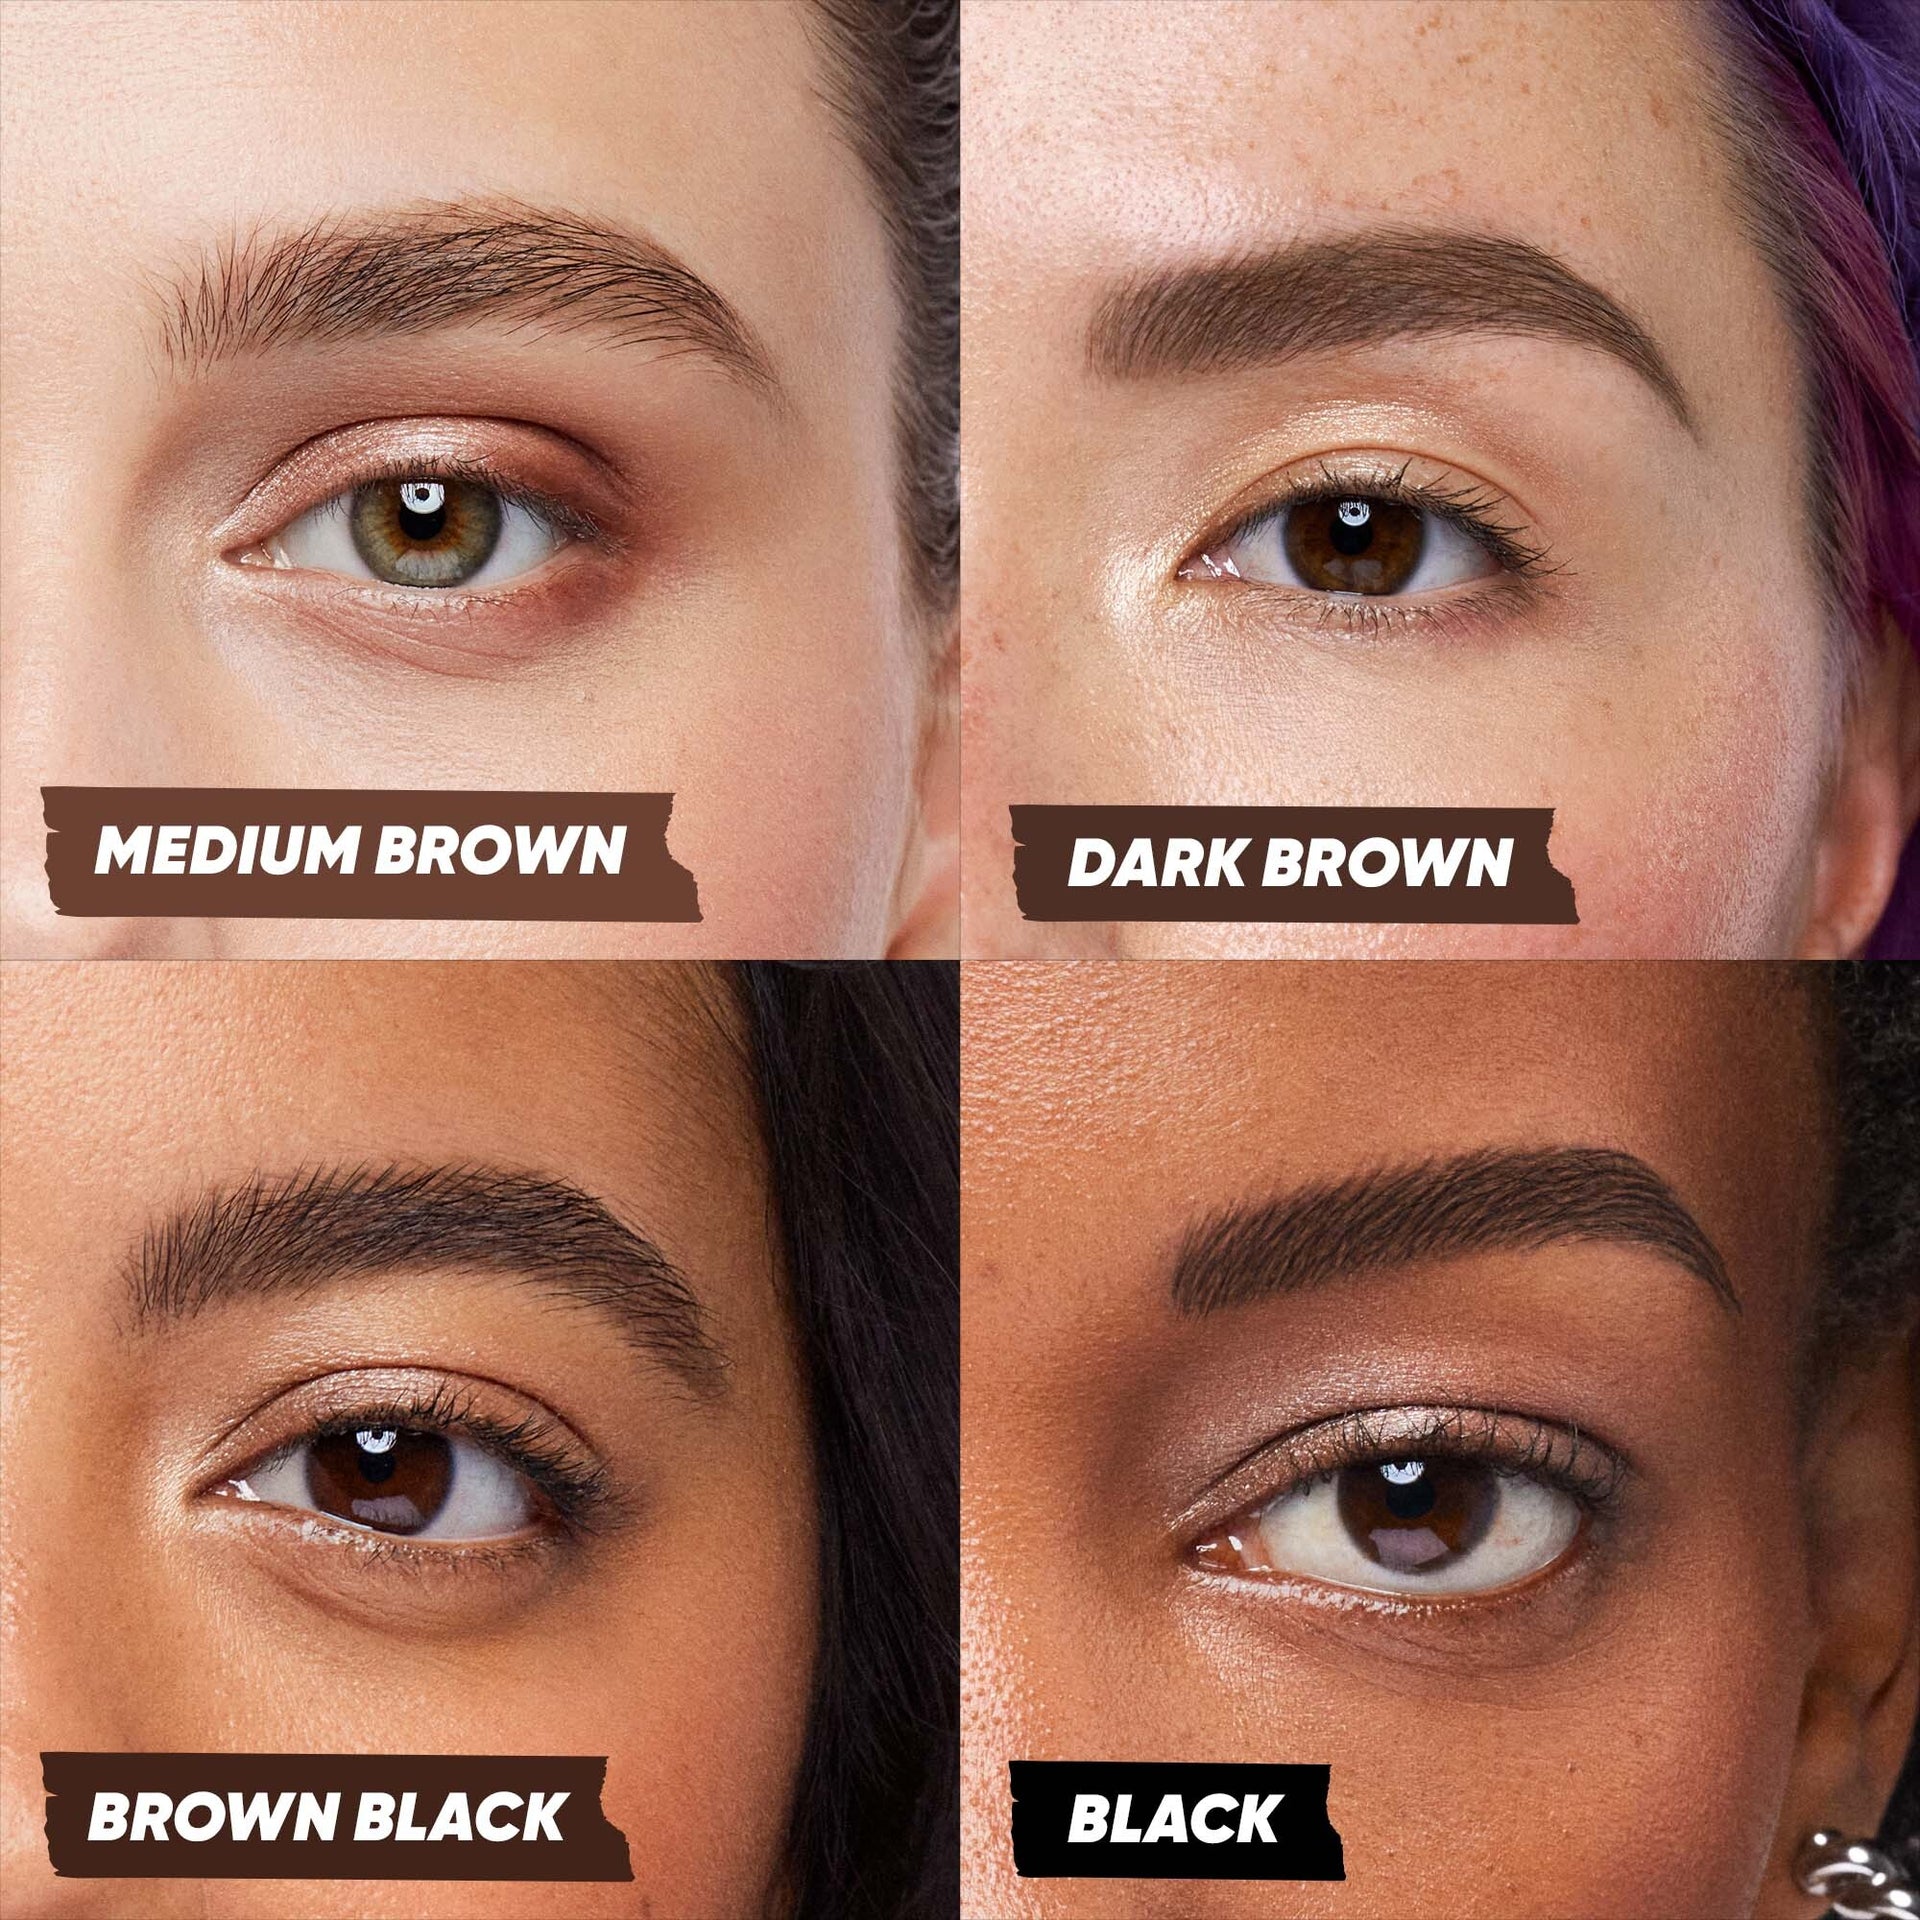 A close-up image showcasing four shades of Kosas Brow Pop Nano (Medium Brown, Dark Brown, Brown Black, and Black) when worn on eyebrows.